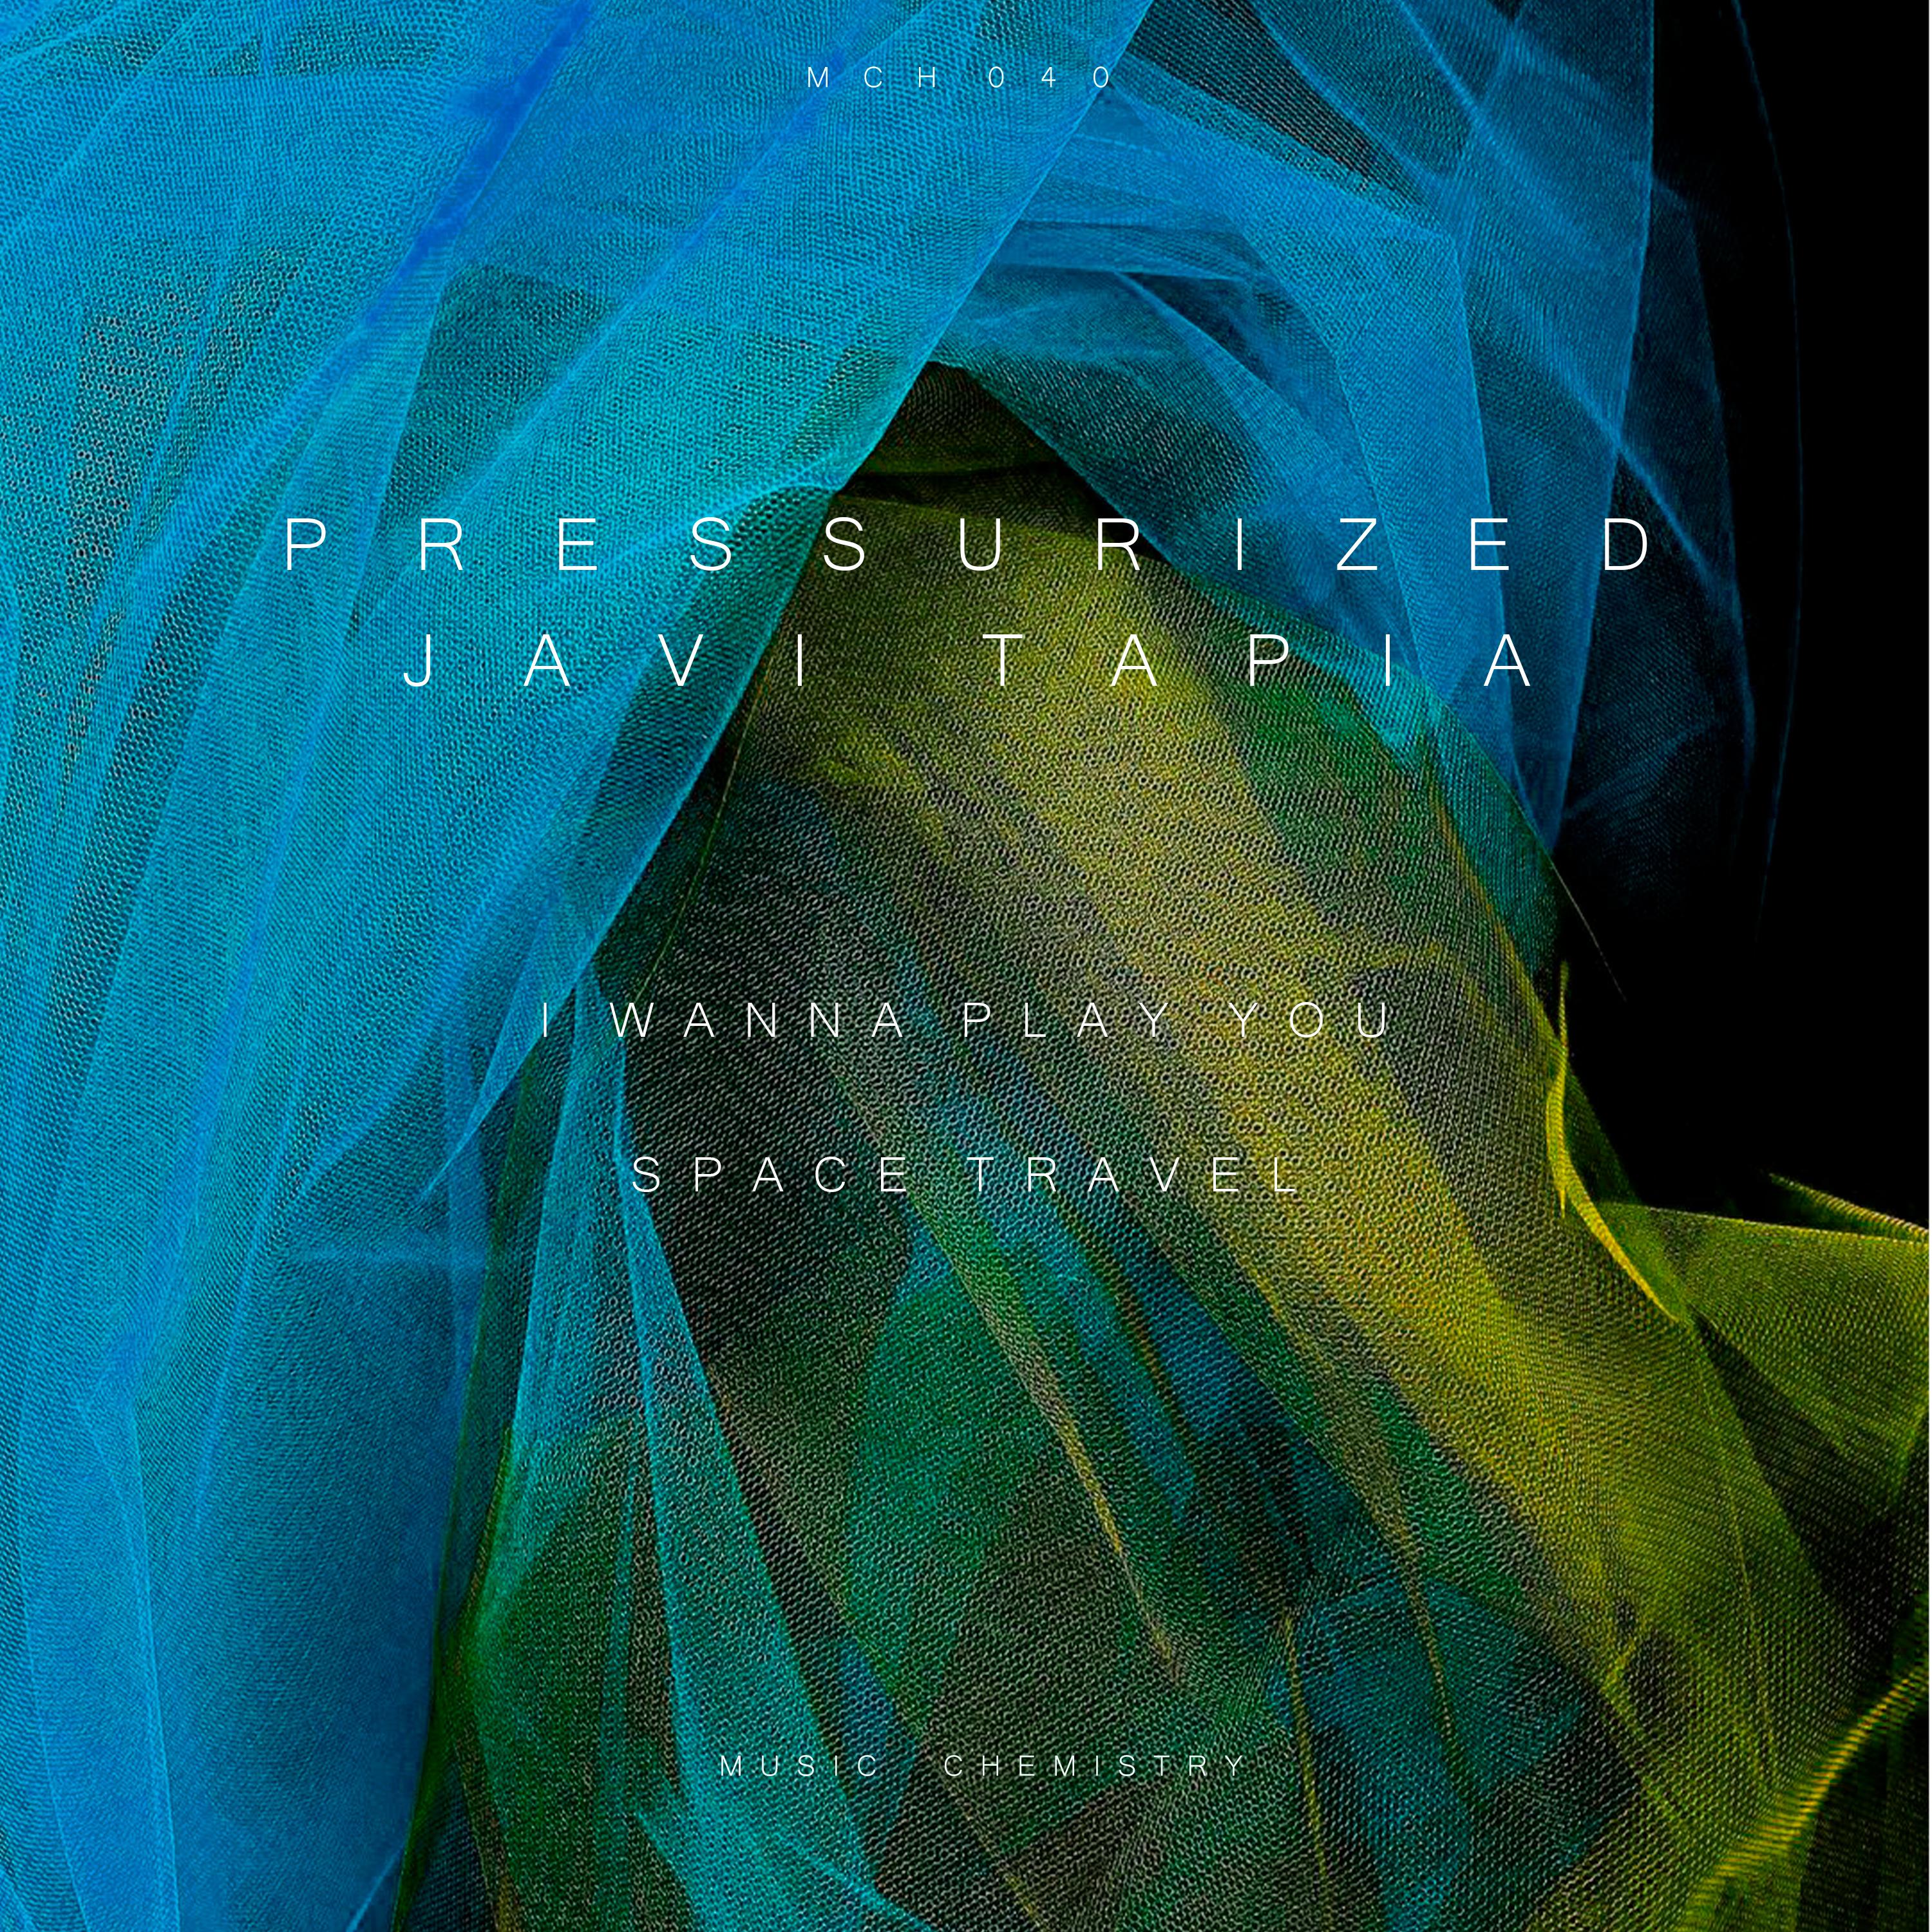 Javi Tapia - Space Travel